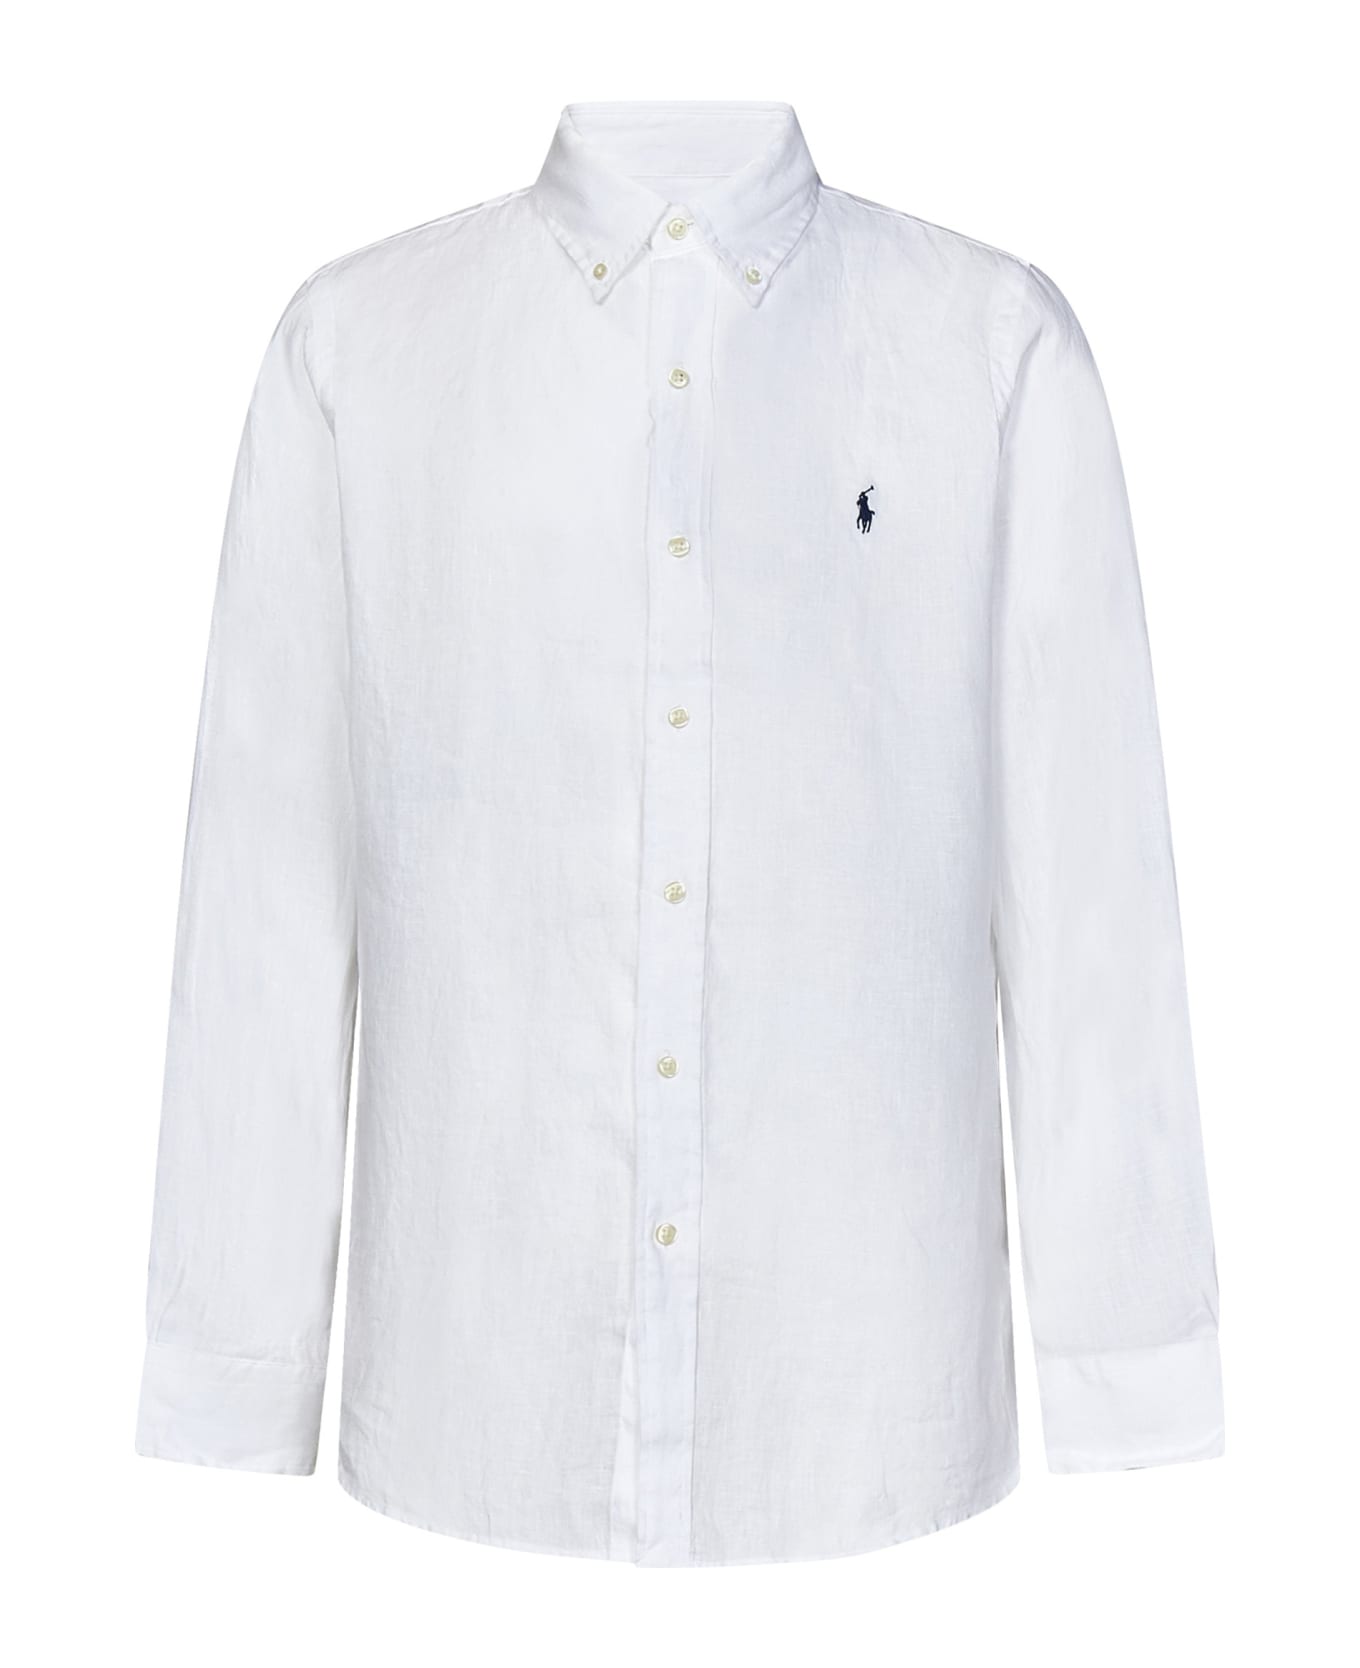 Ralph Lauren Shirt - white